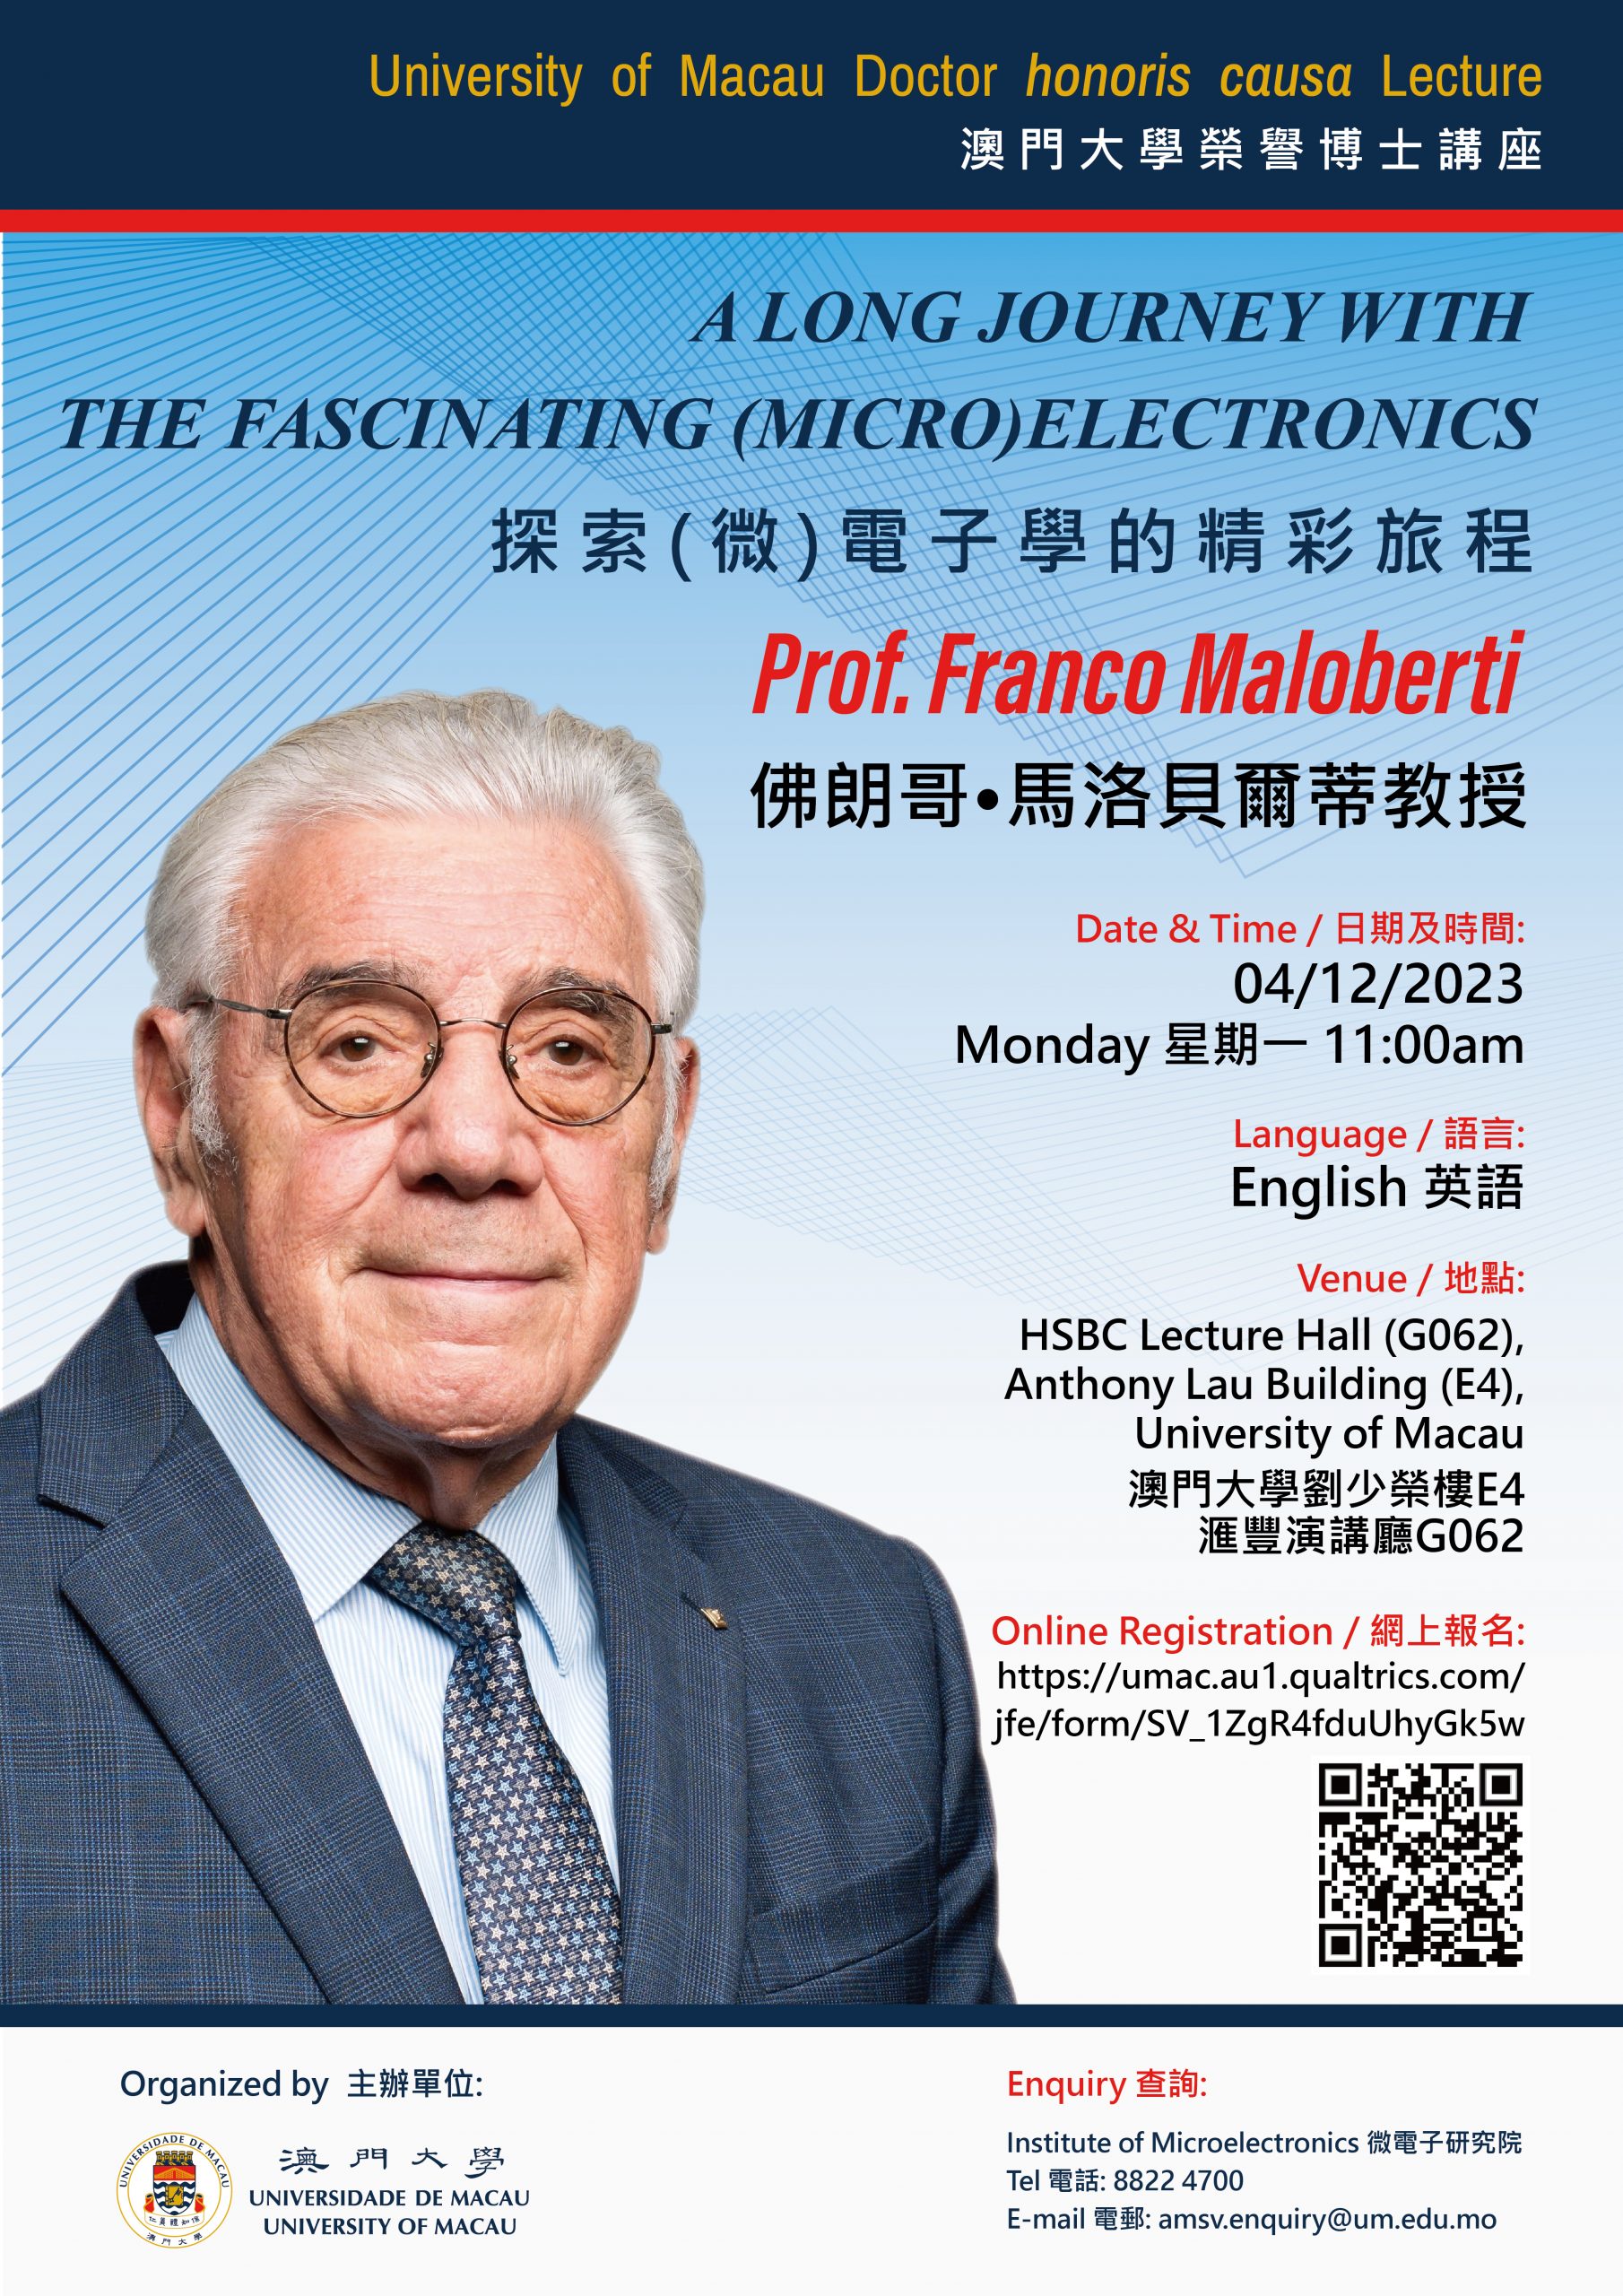 UM Doctor honoris causa Lecture - Prof. Franco Maloberti